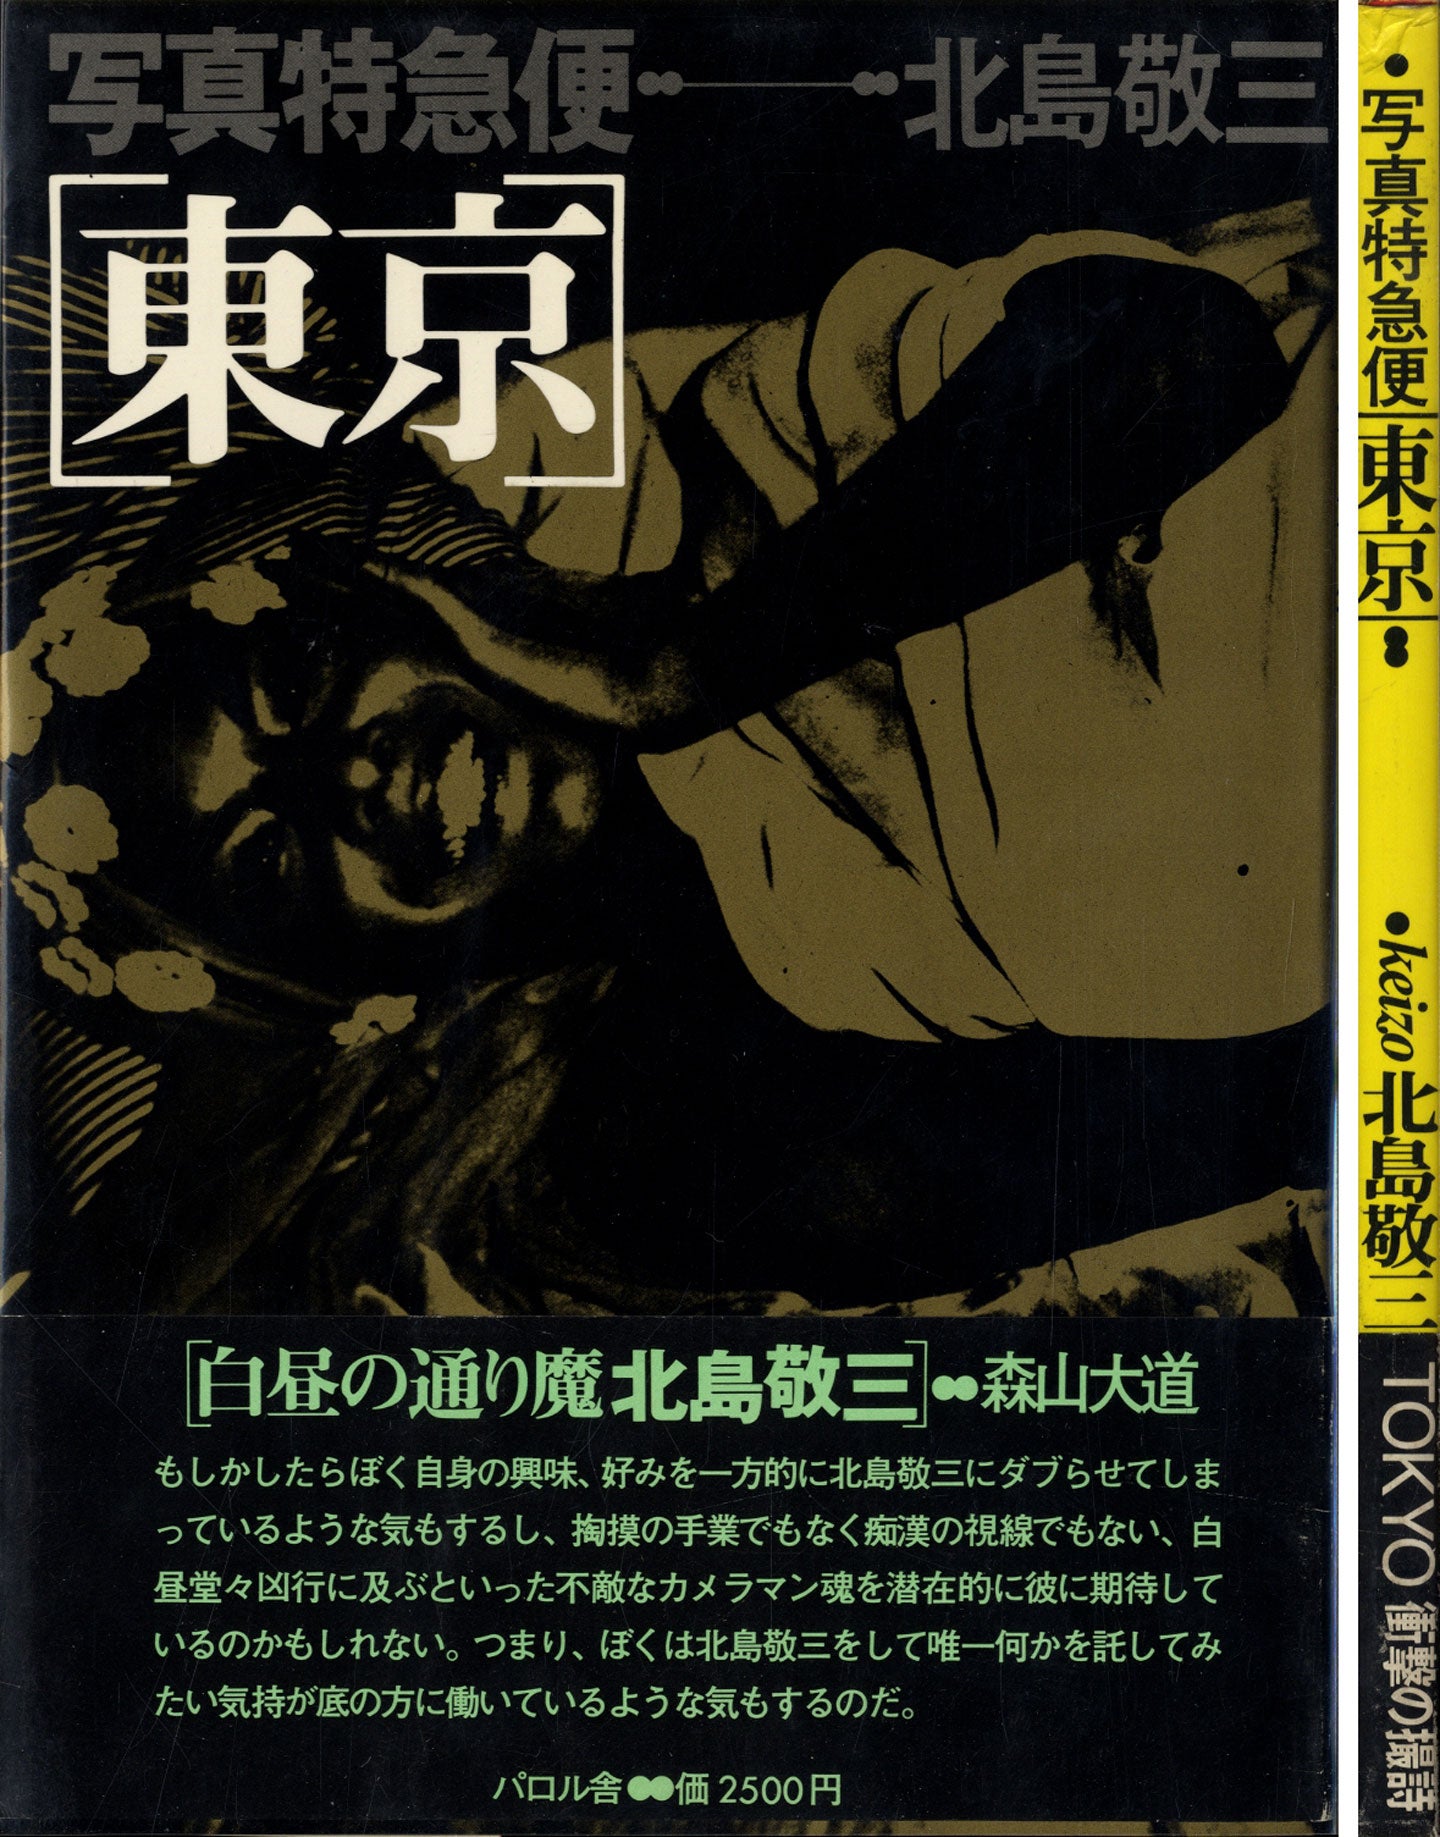 Keizo Kitajima: Shashin Tokkyubin Tokyo (Photomail from Tokyo) (First Printing, with Black obi) [SIGNED]